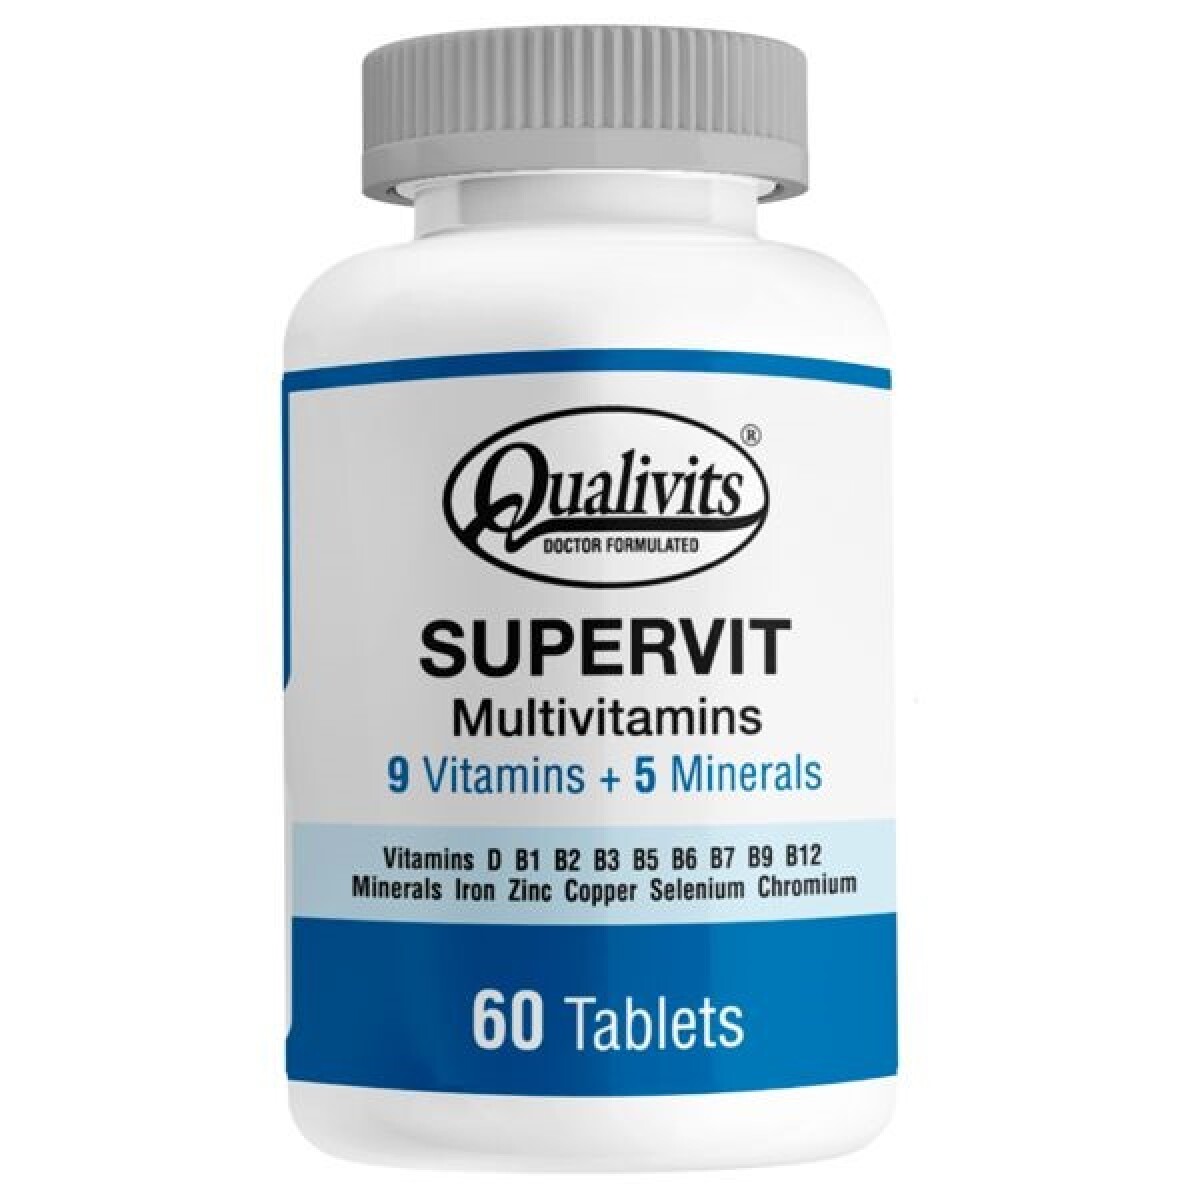 Super Vit Multi-vitamins Qualivits 60 Tabletas 